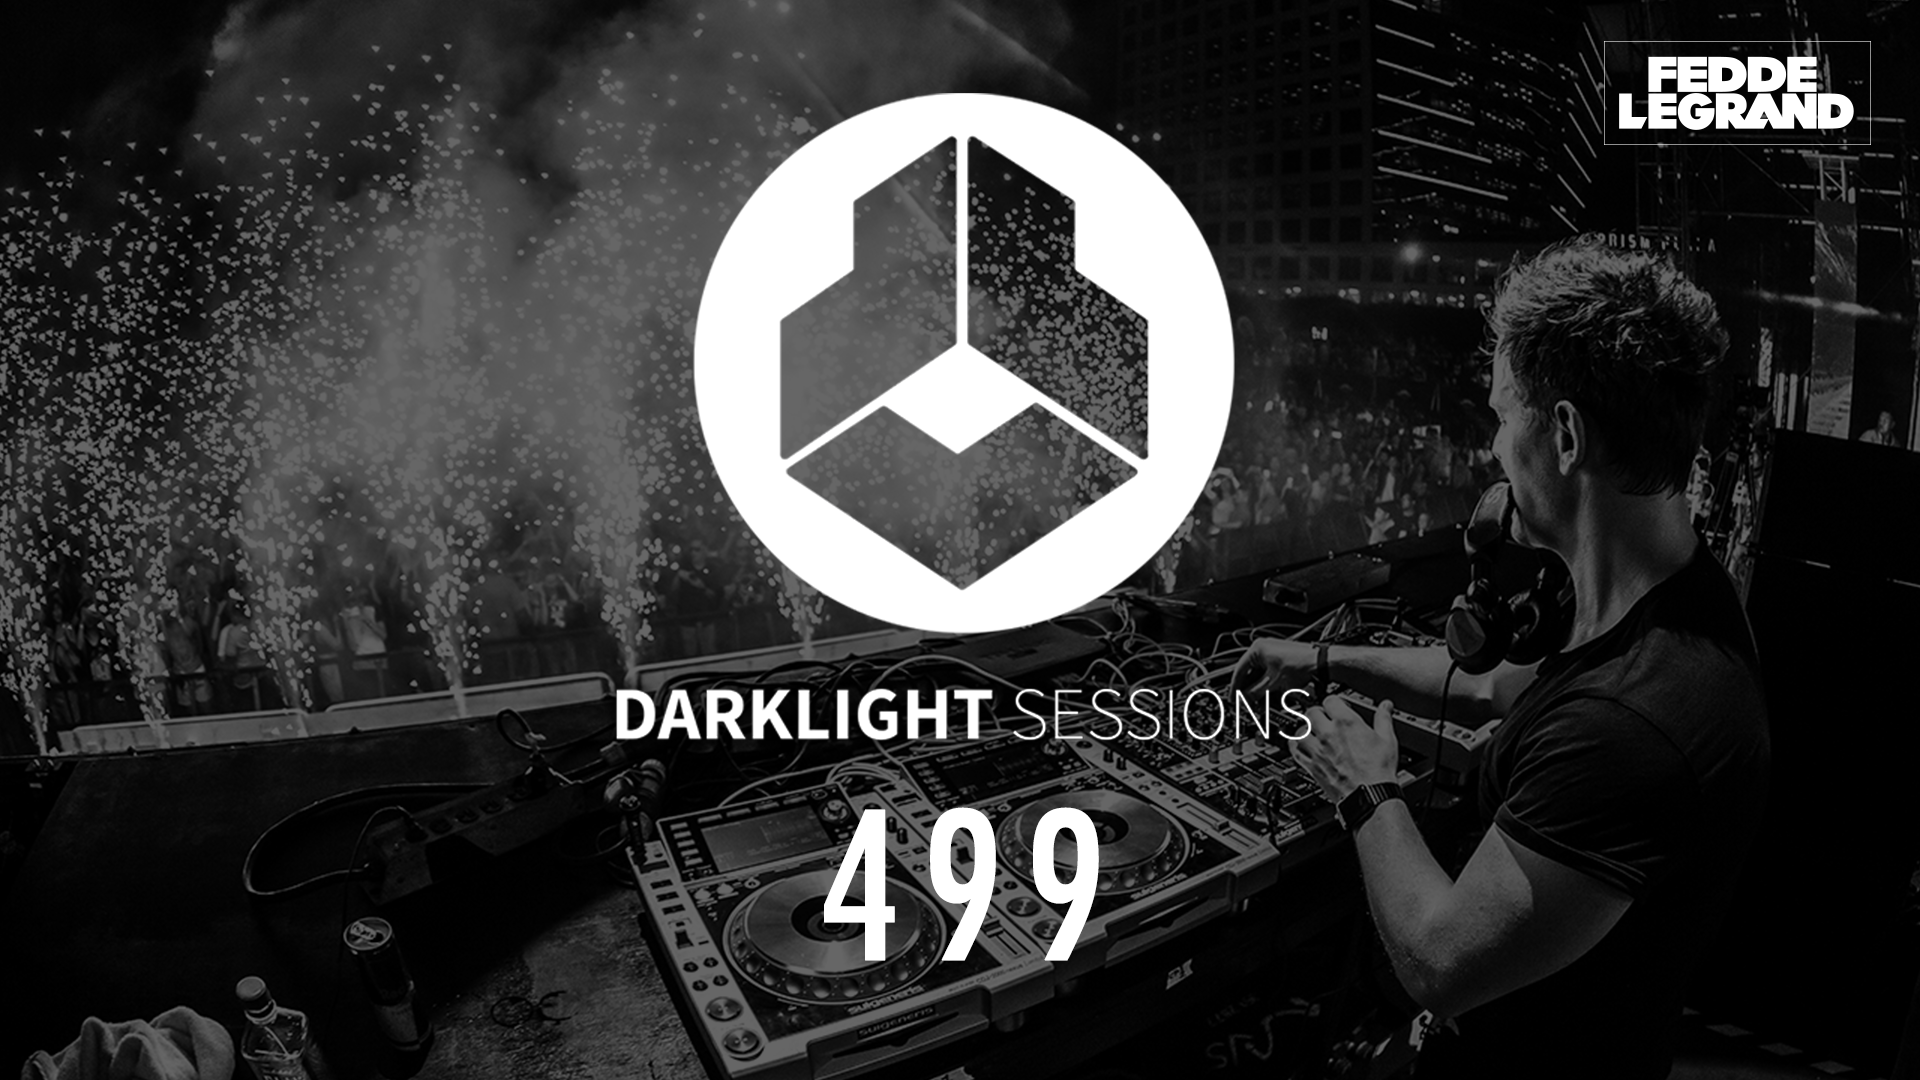 Darklight Sessions 499